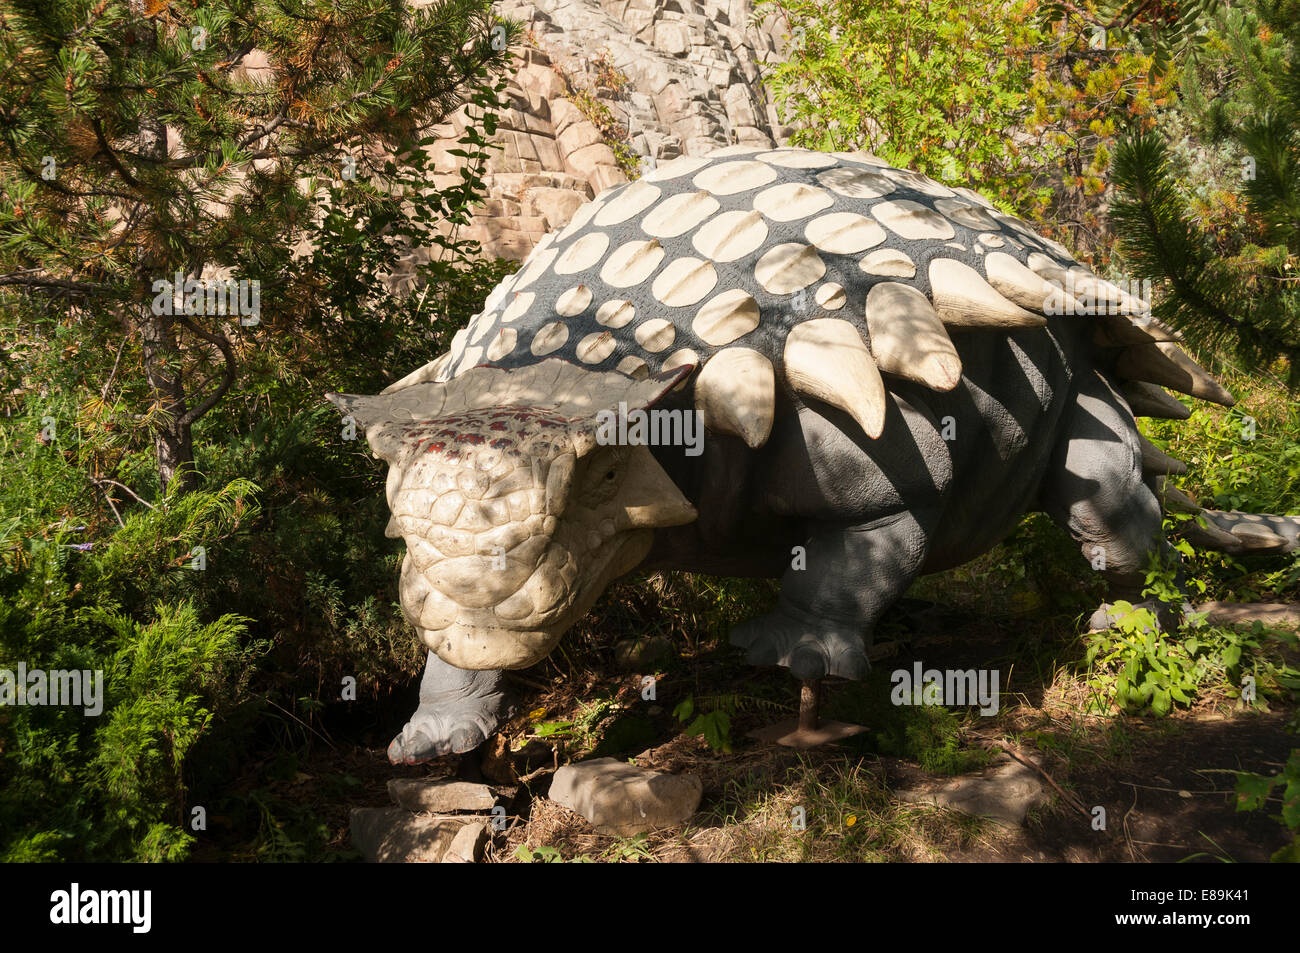 Elk203-6400 Kanada, Alberta, Calgary, Calgary Zoo, Prehistoric Park Dinosaurier statue Stockfoto